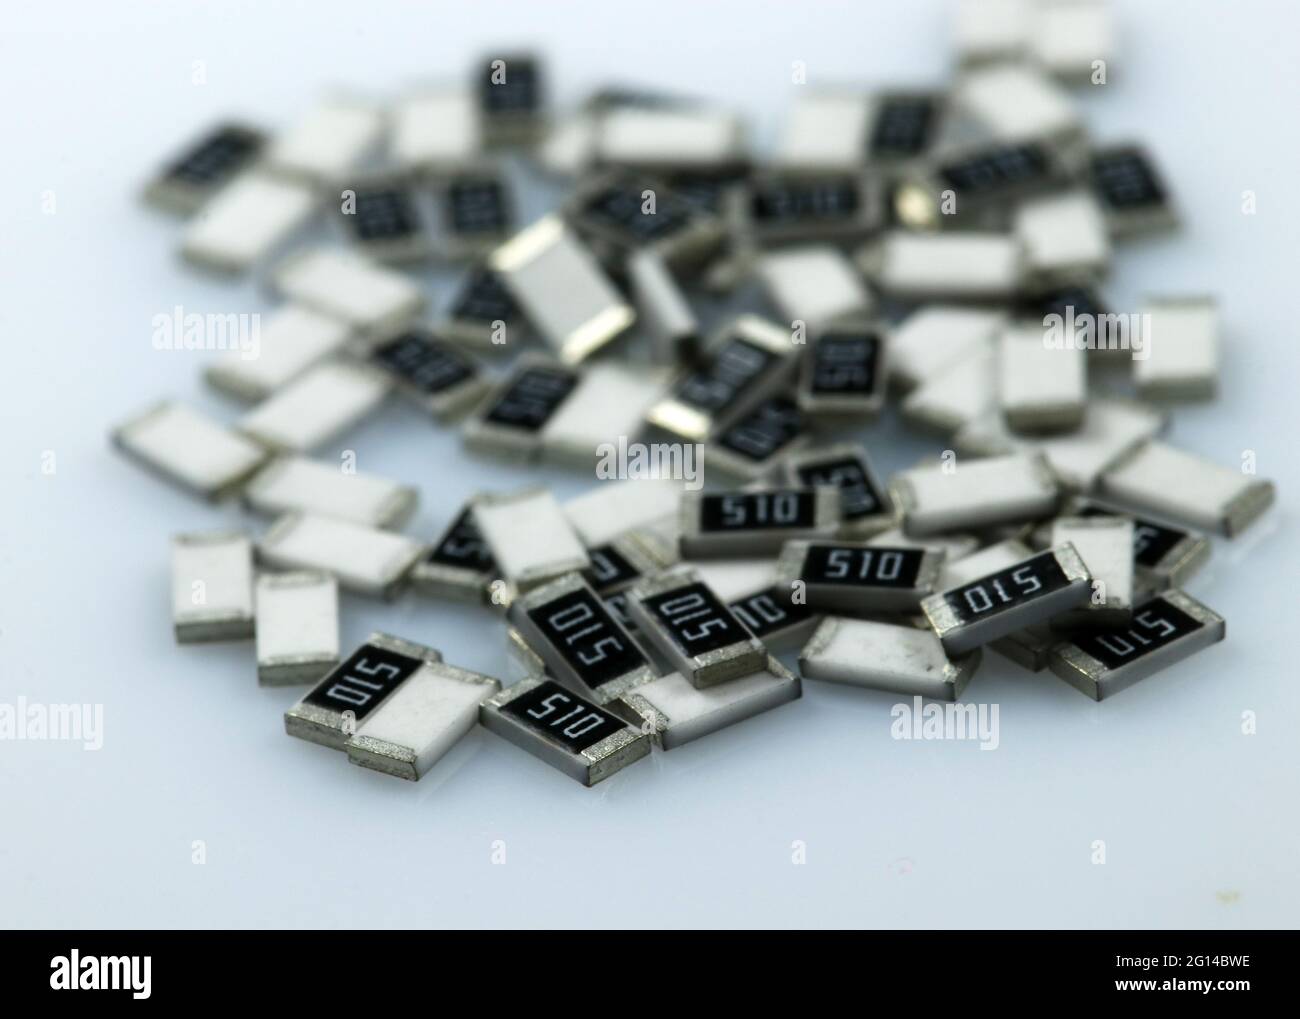 SMD resistors on white background. Ceramic resistors. Stock Photo